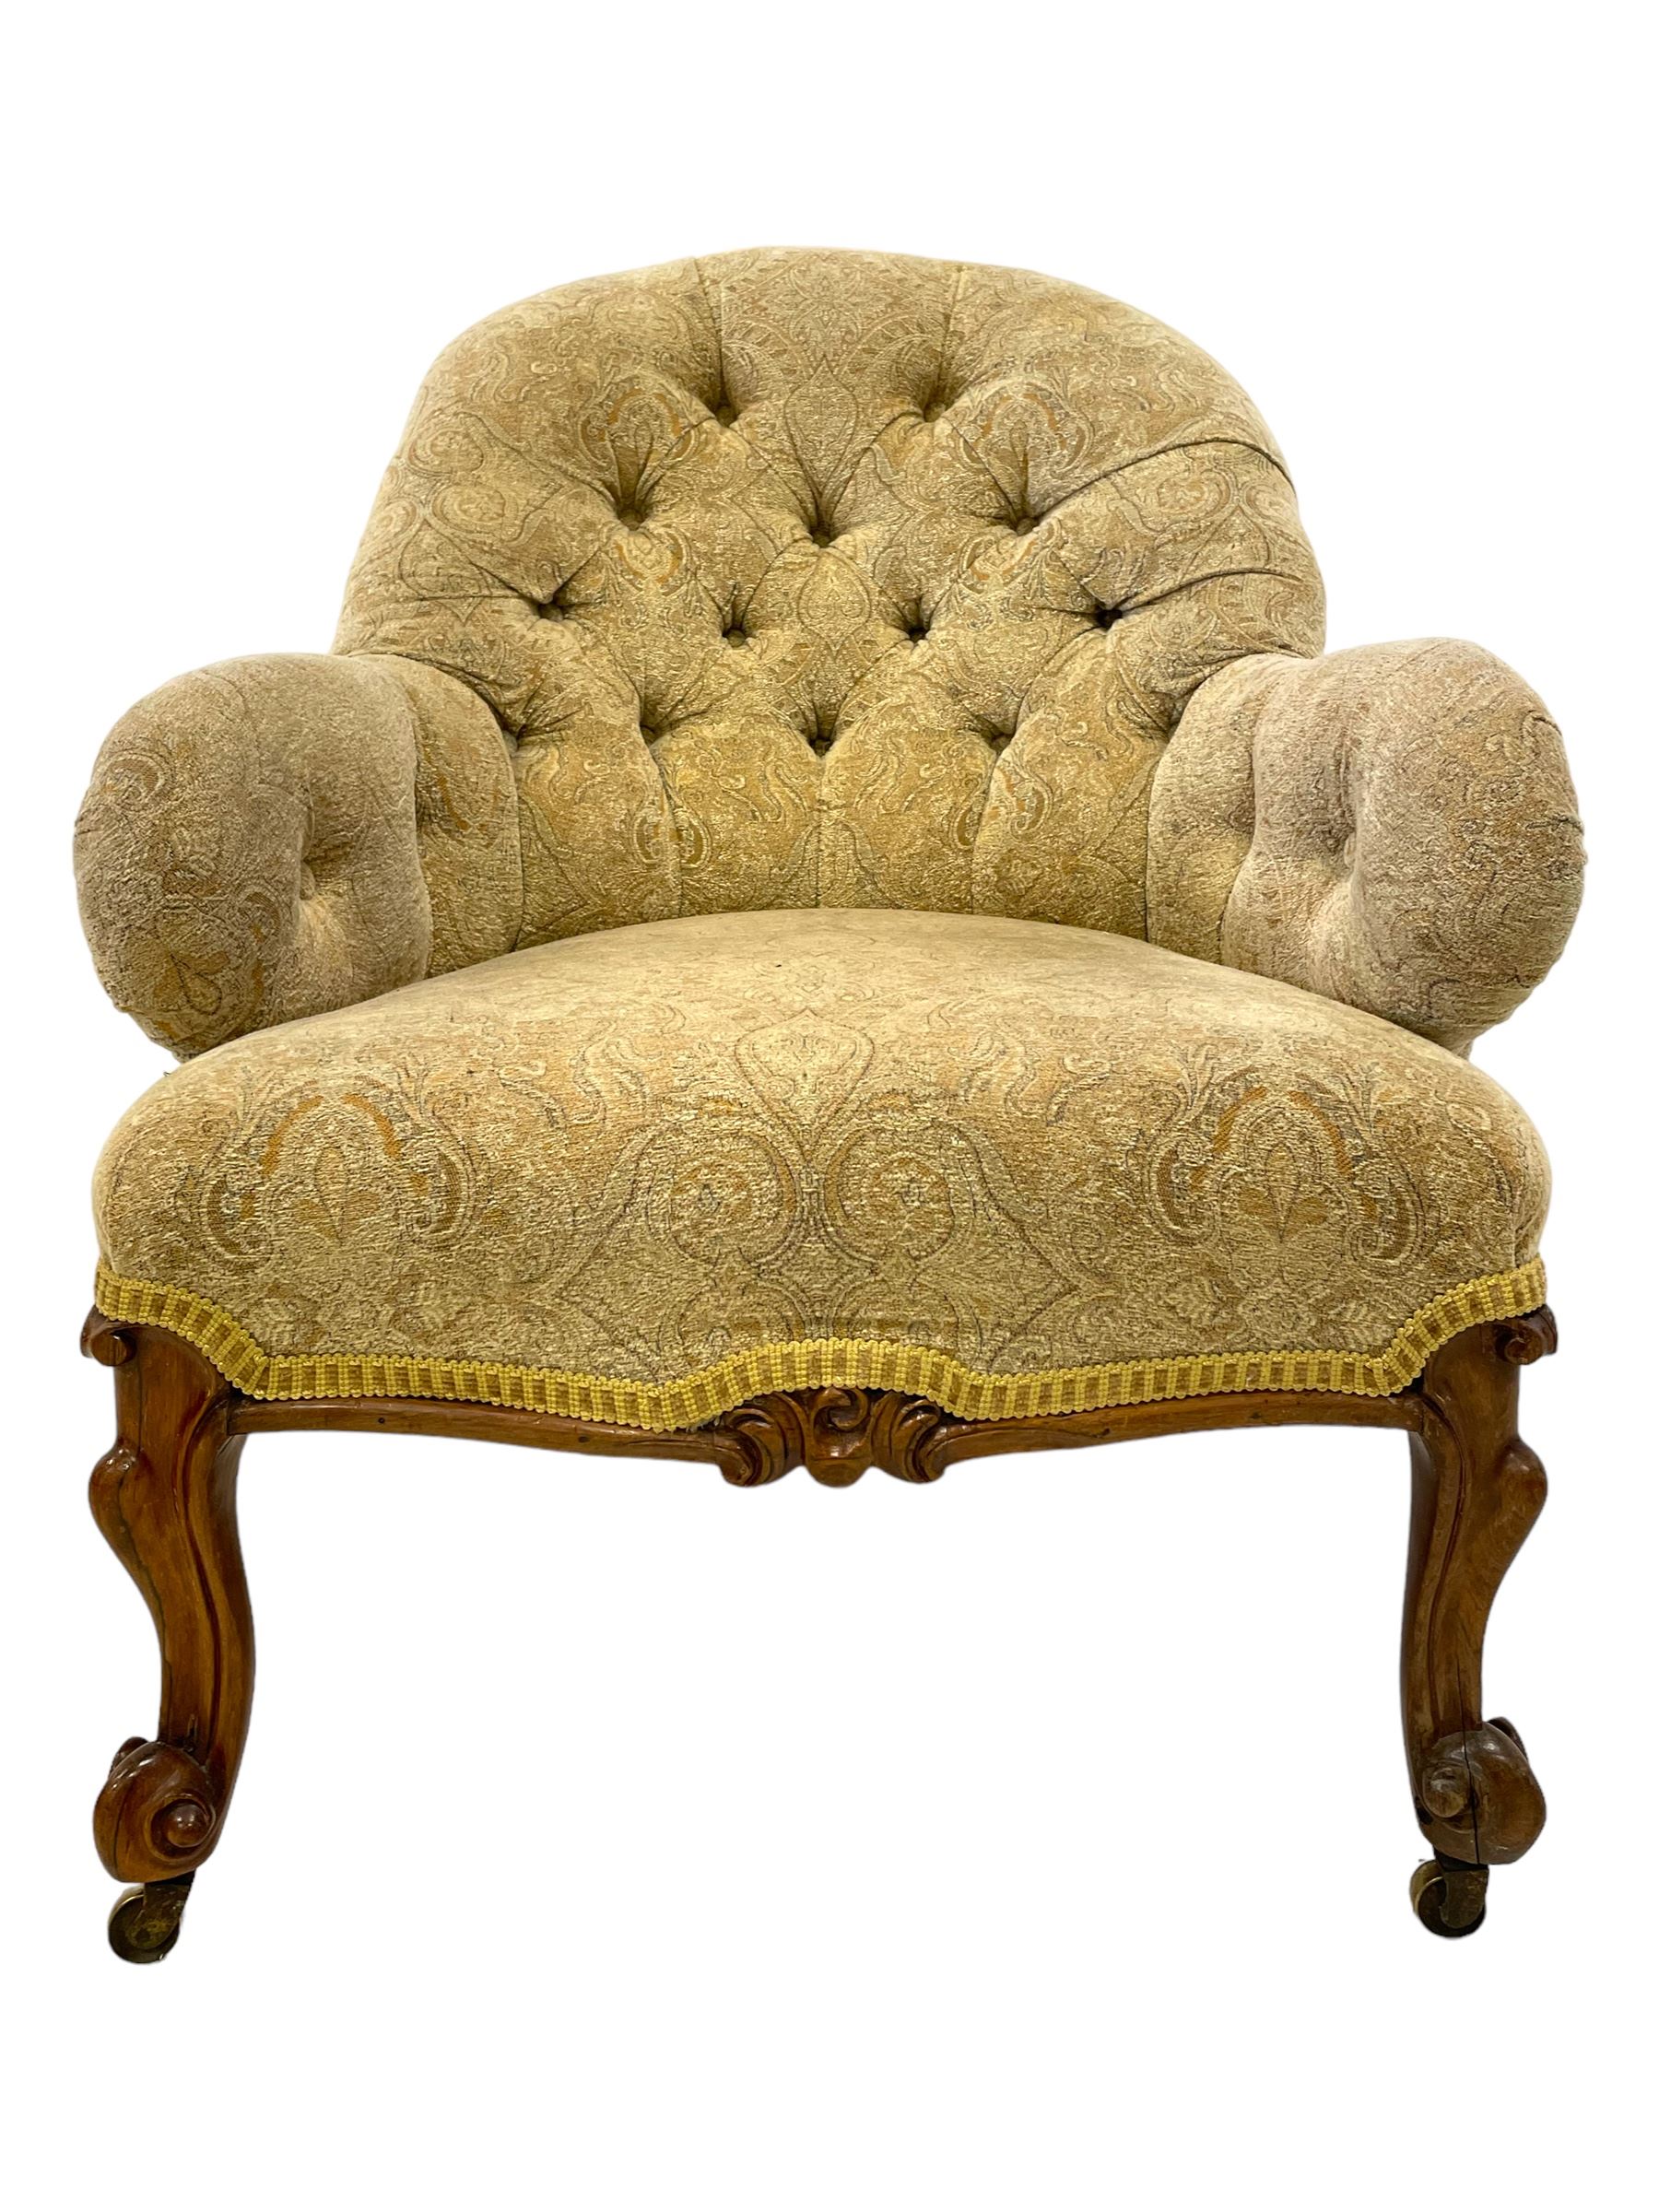 19th century rosewood framed armchair